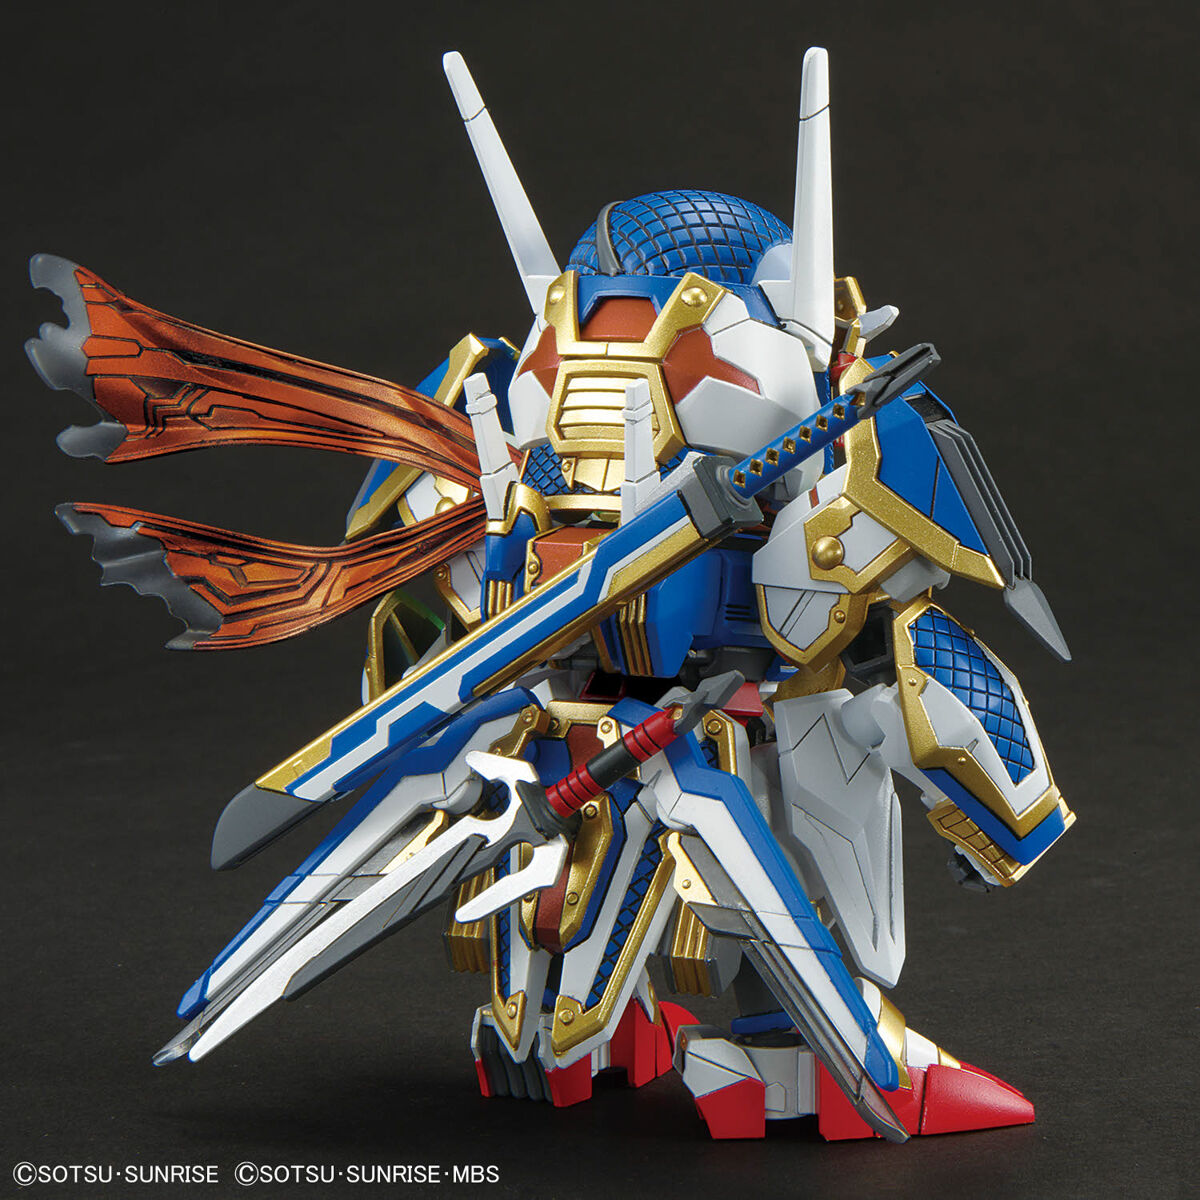 SD Gundam World Heroes No.035 Onmitsu Gundam Aerial